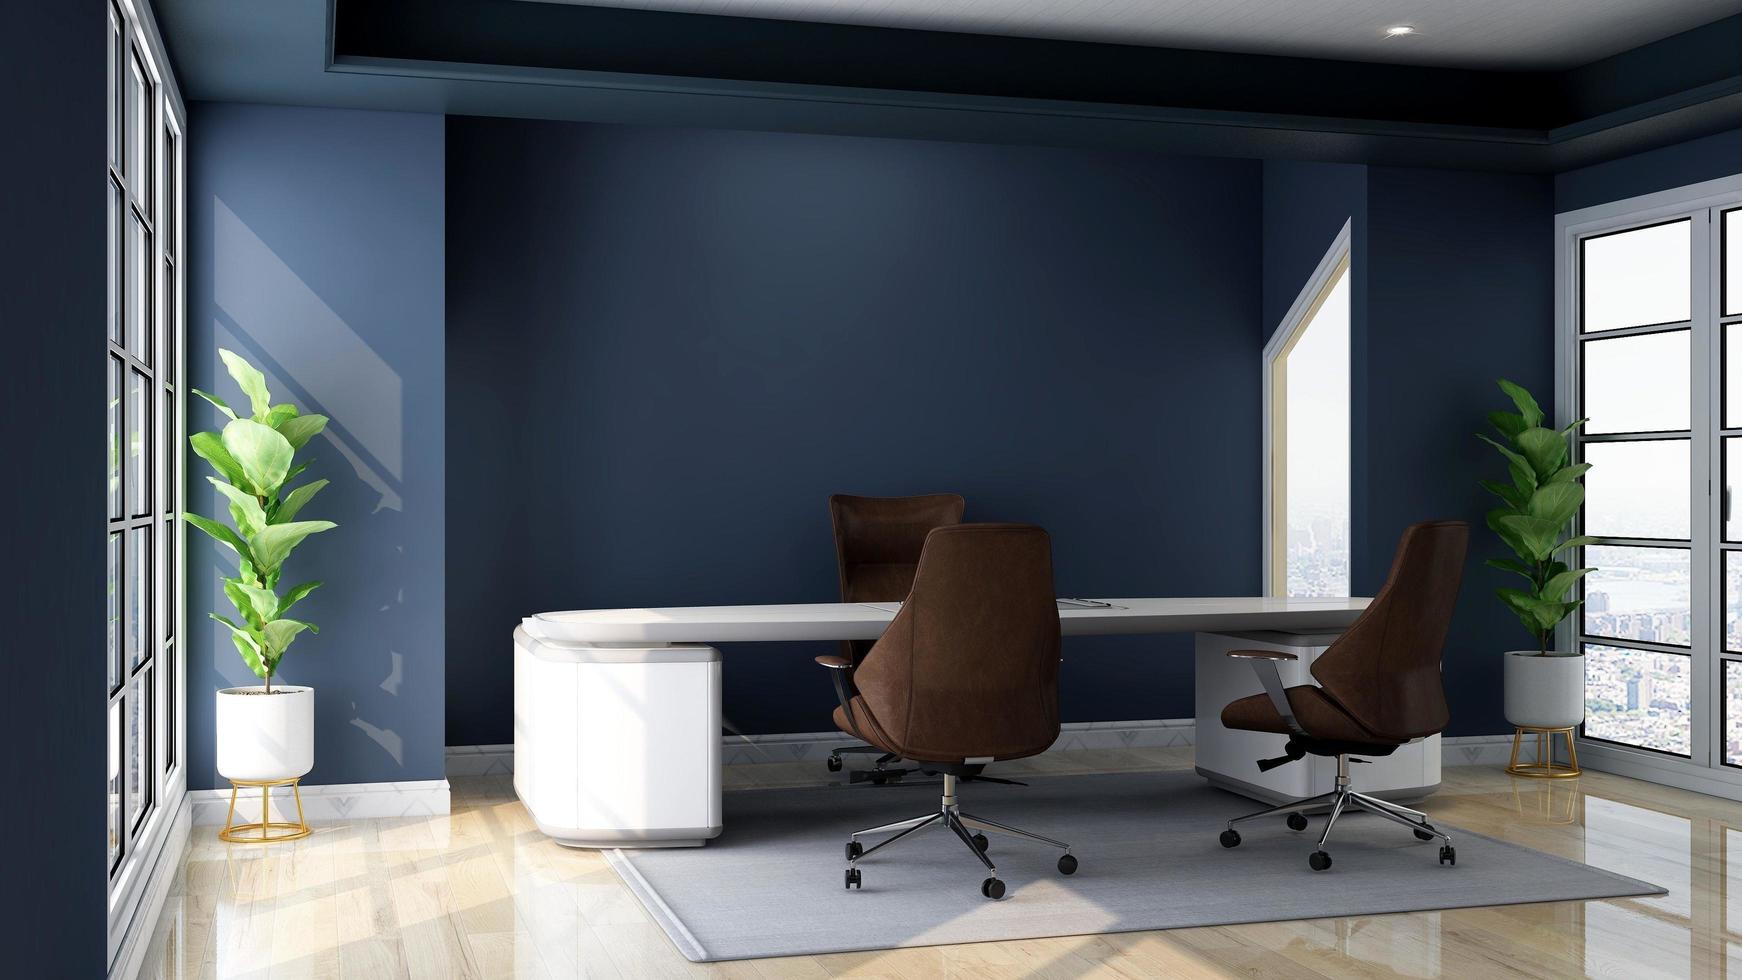 3D Render modern office design - manager room interior wall mockup photo